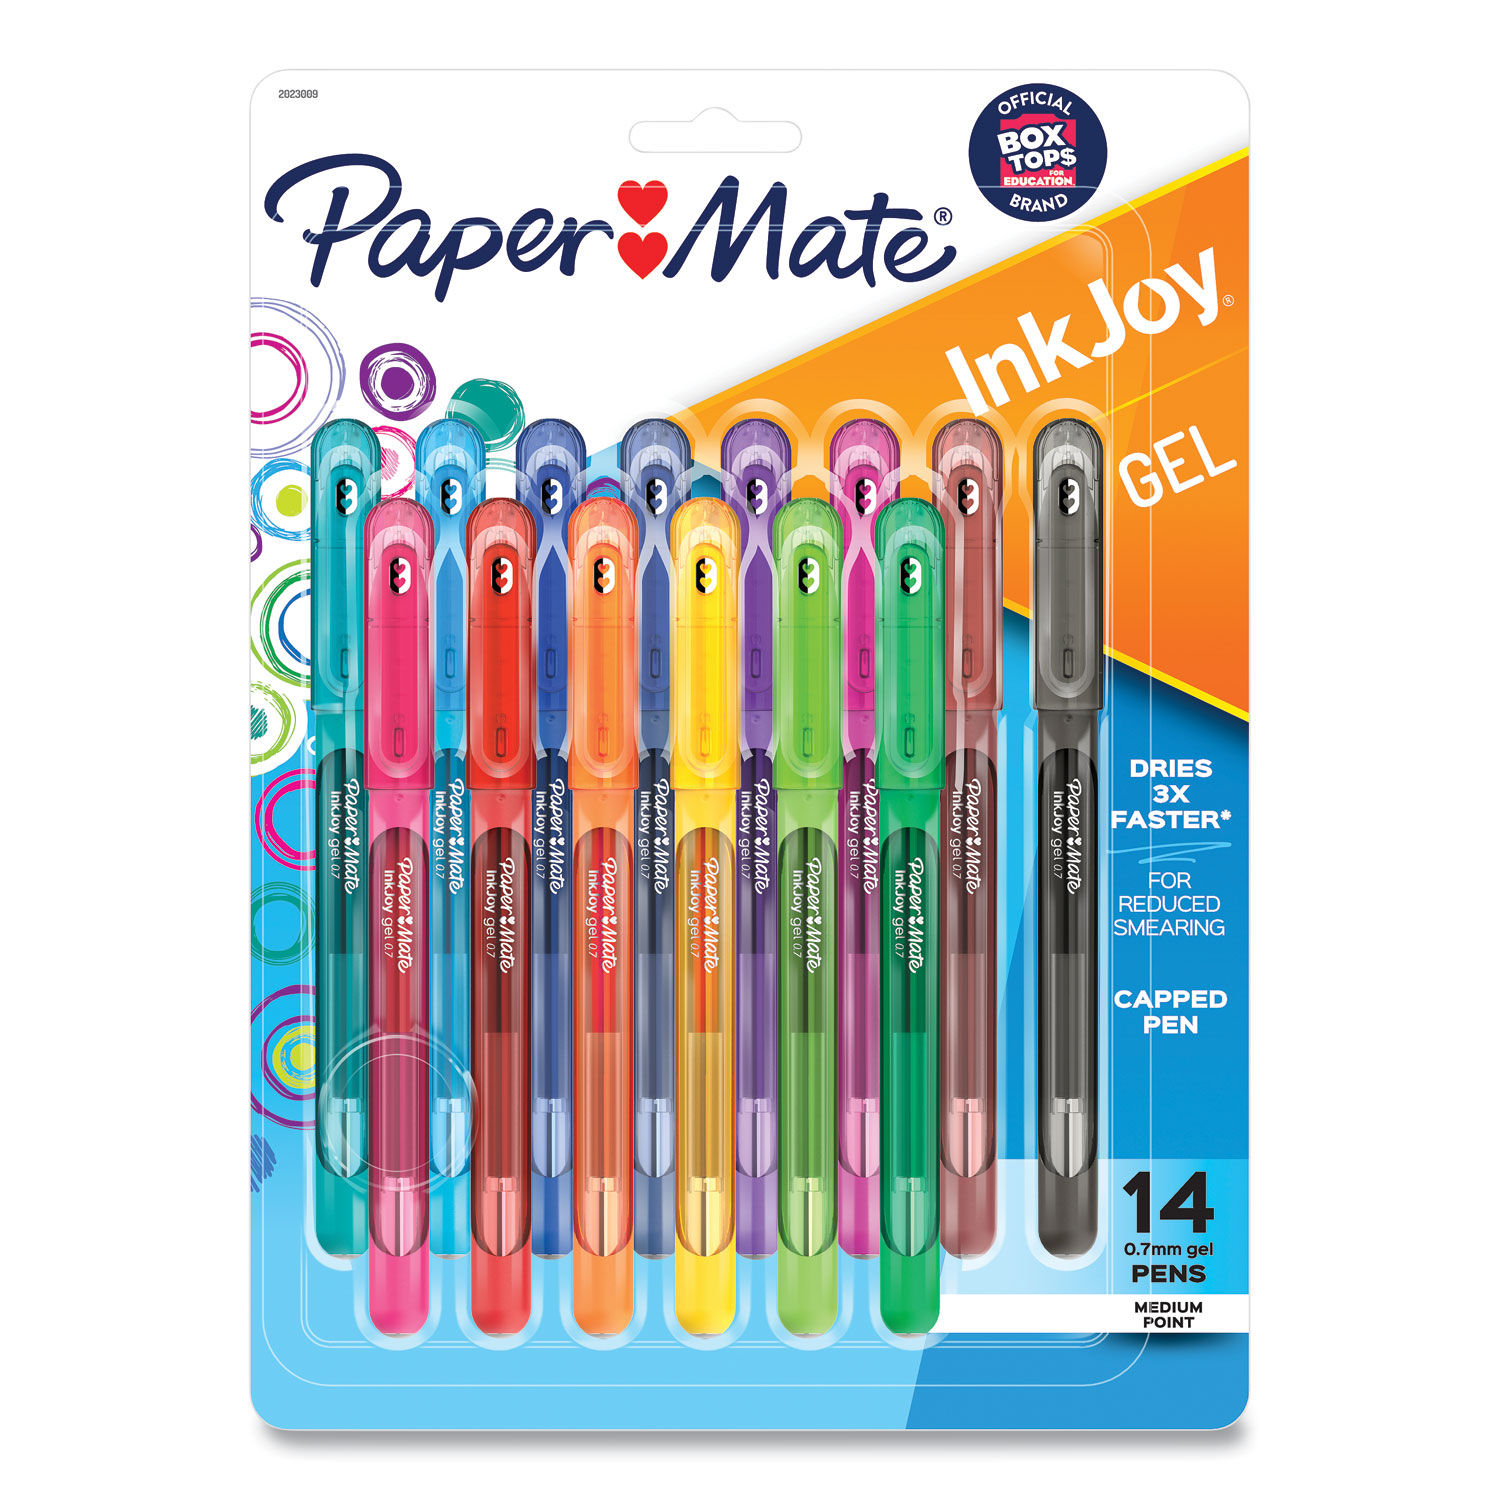 Paper Mate InkJoy Gel Pen 0.7 - Pack of 12 / Red